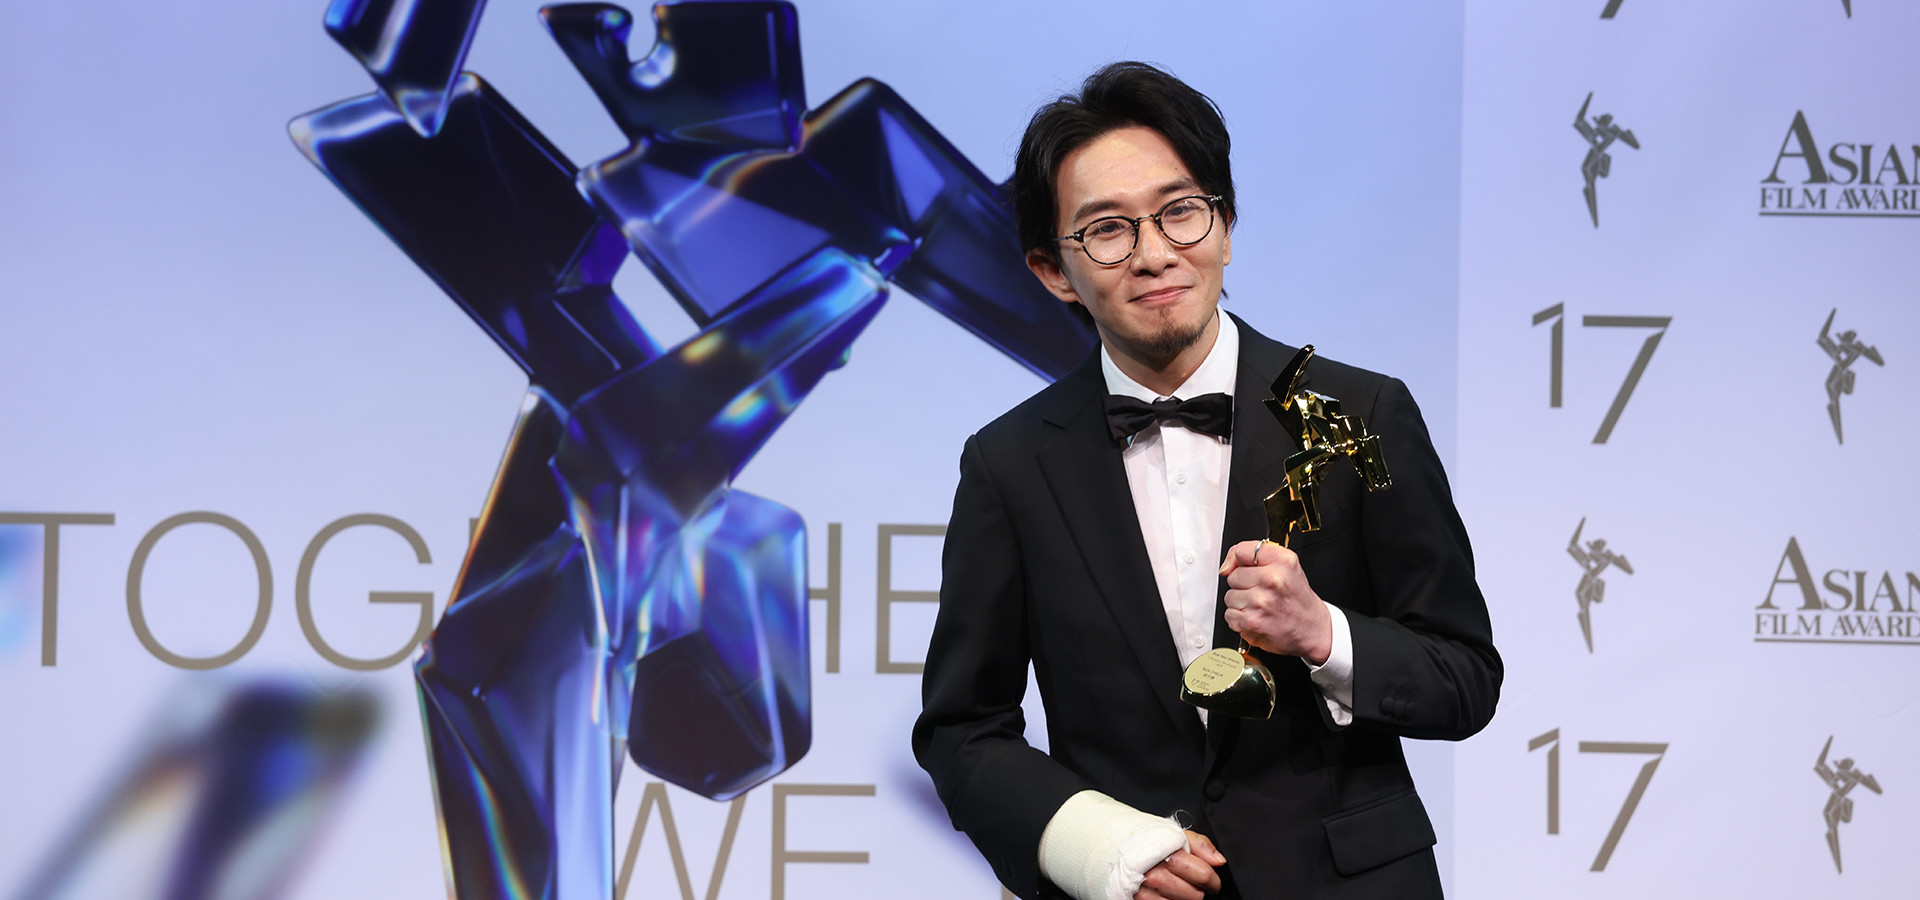 Alumnus wins Best New Director at Asian Film Awards